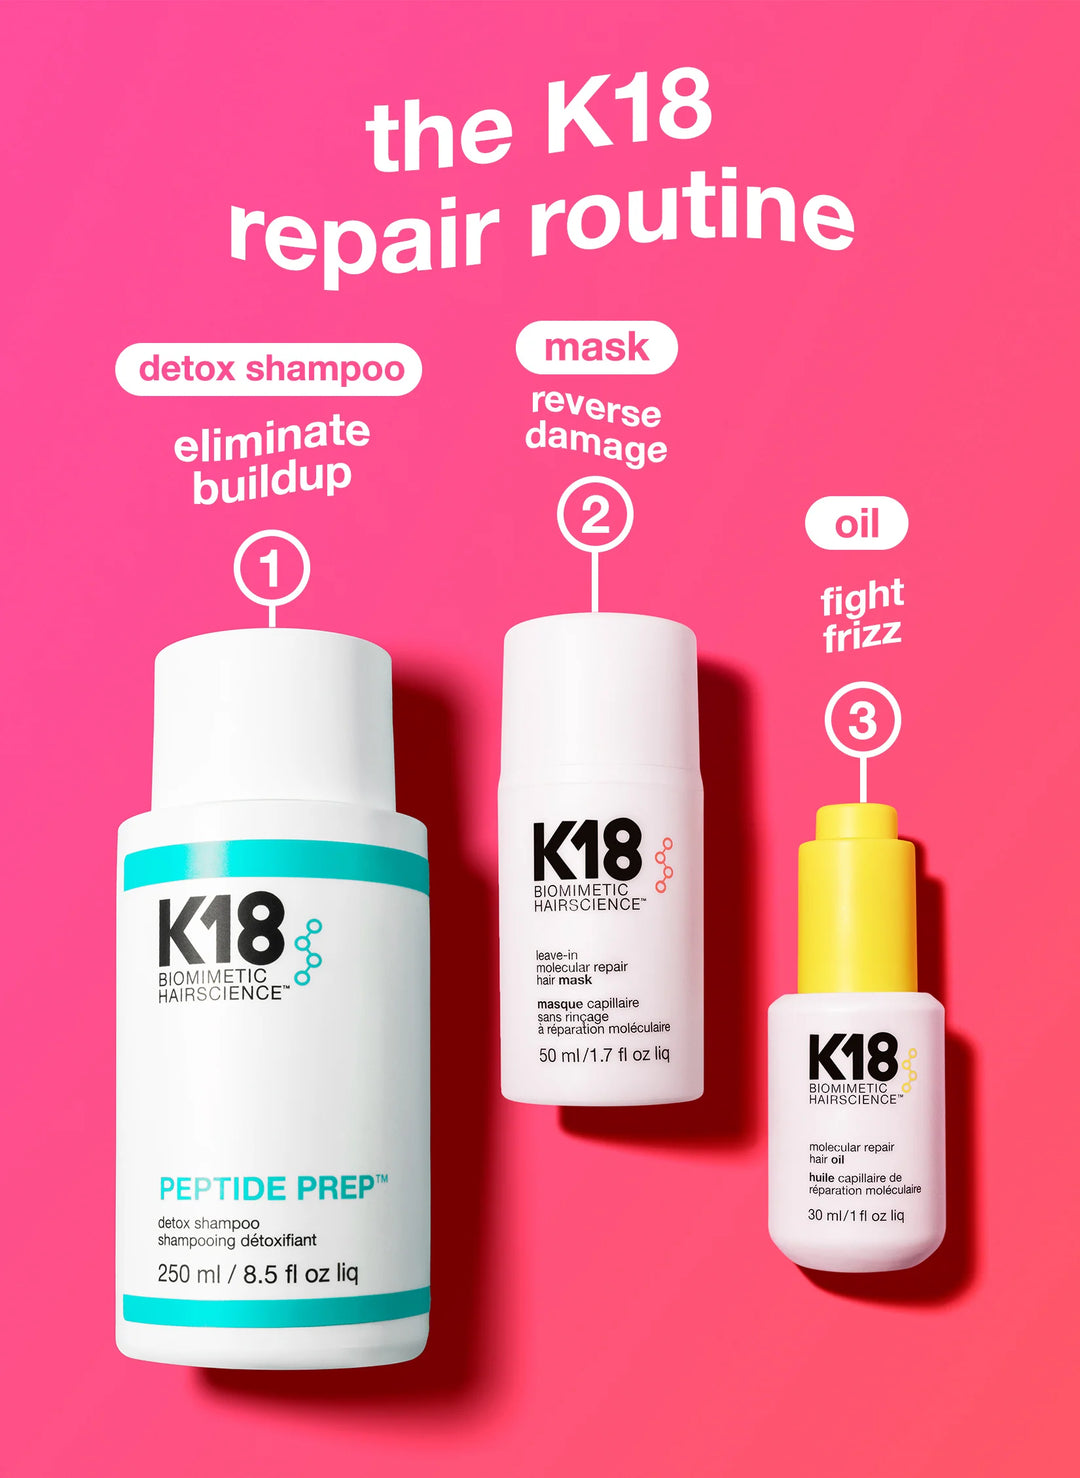 K18 - Hair mask - leave-in - molecular repair